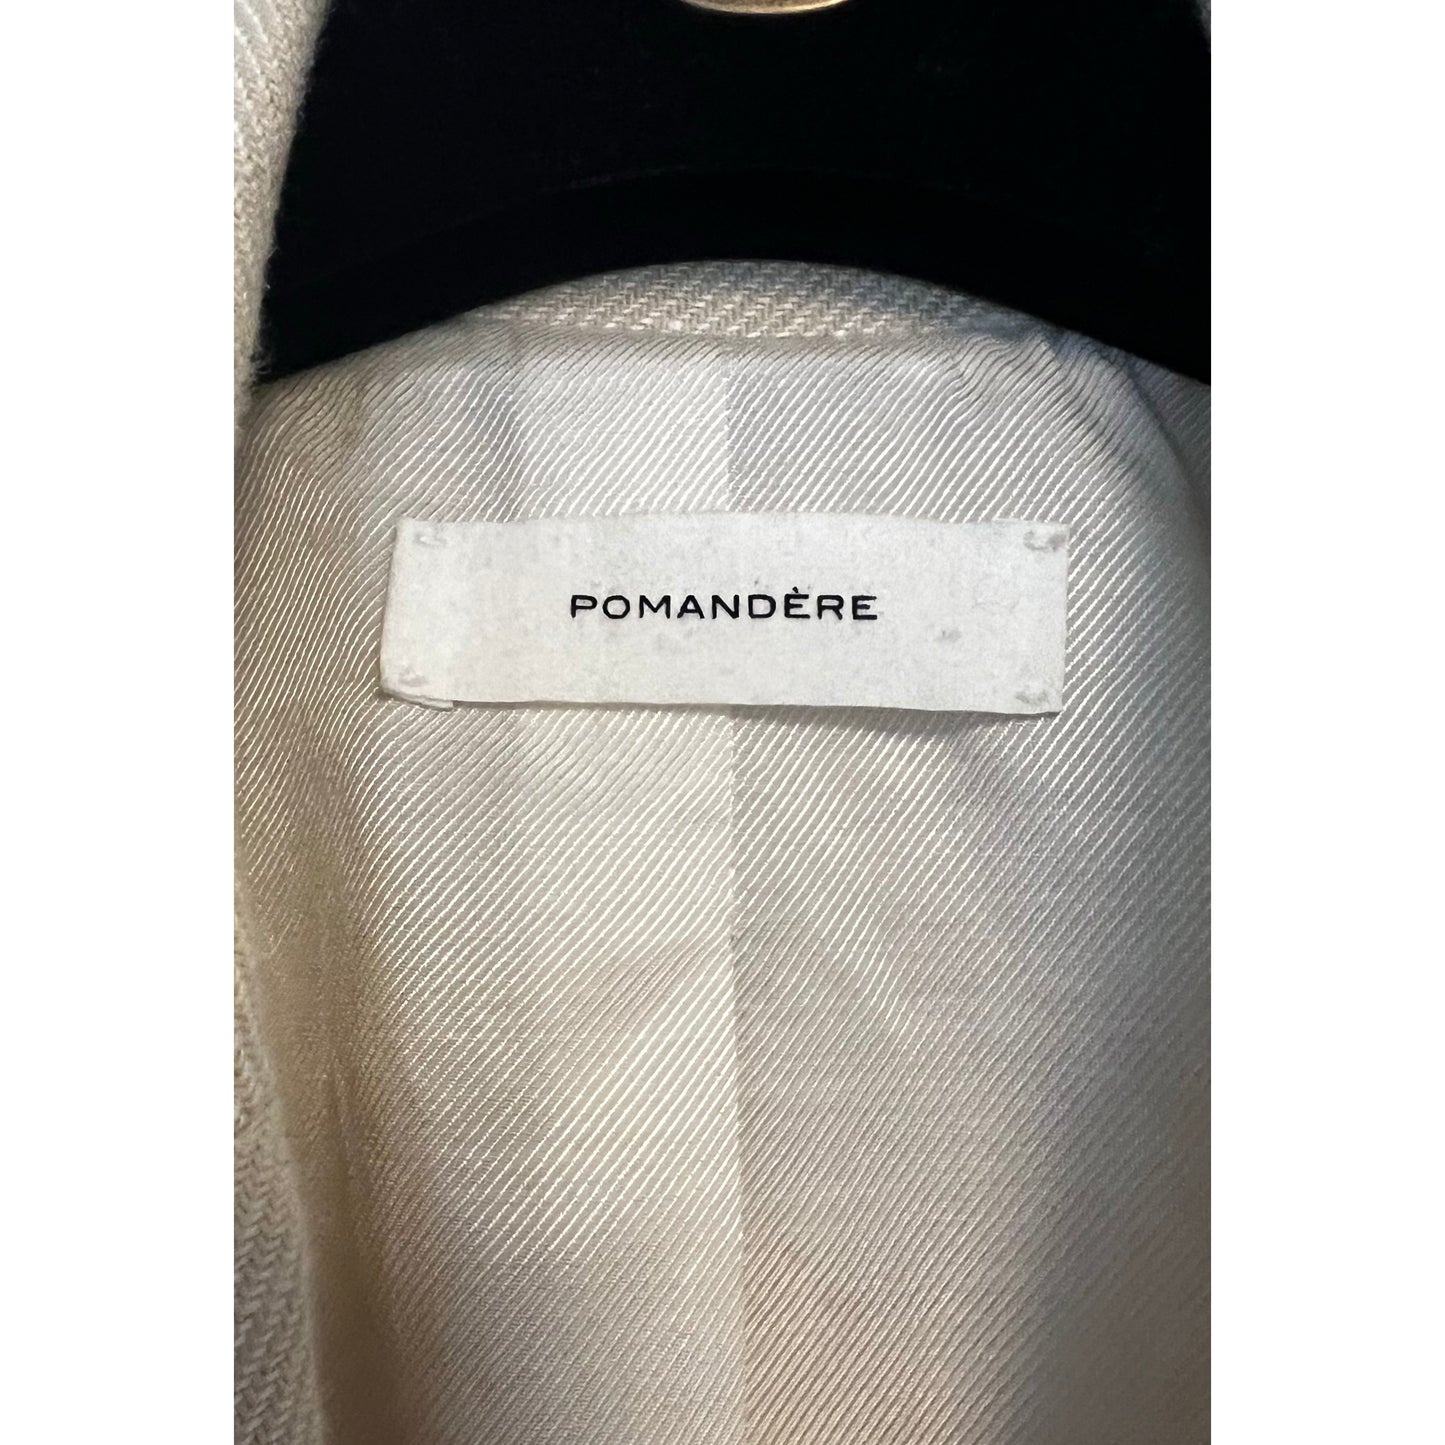 Pomandere Cream Linen Jacket, size 36 (fits like a size 0/2)